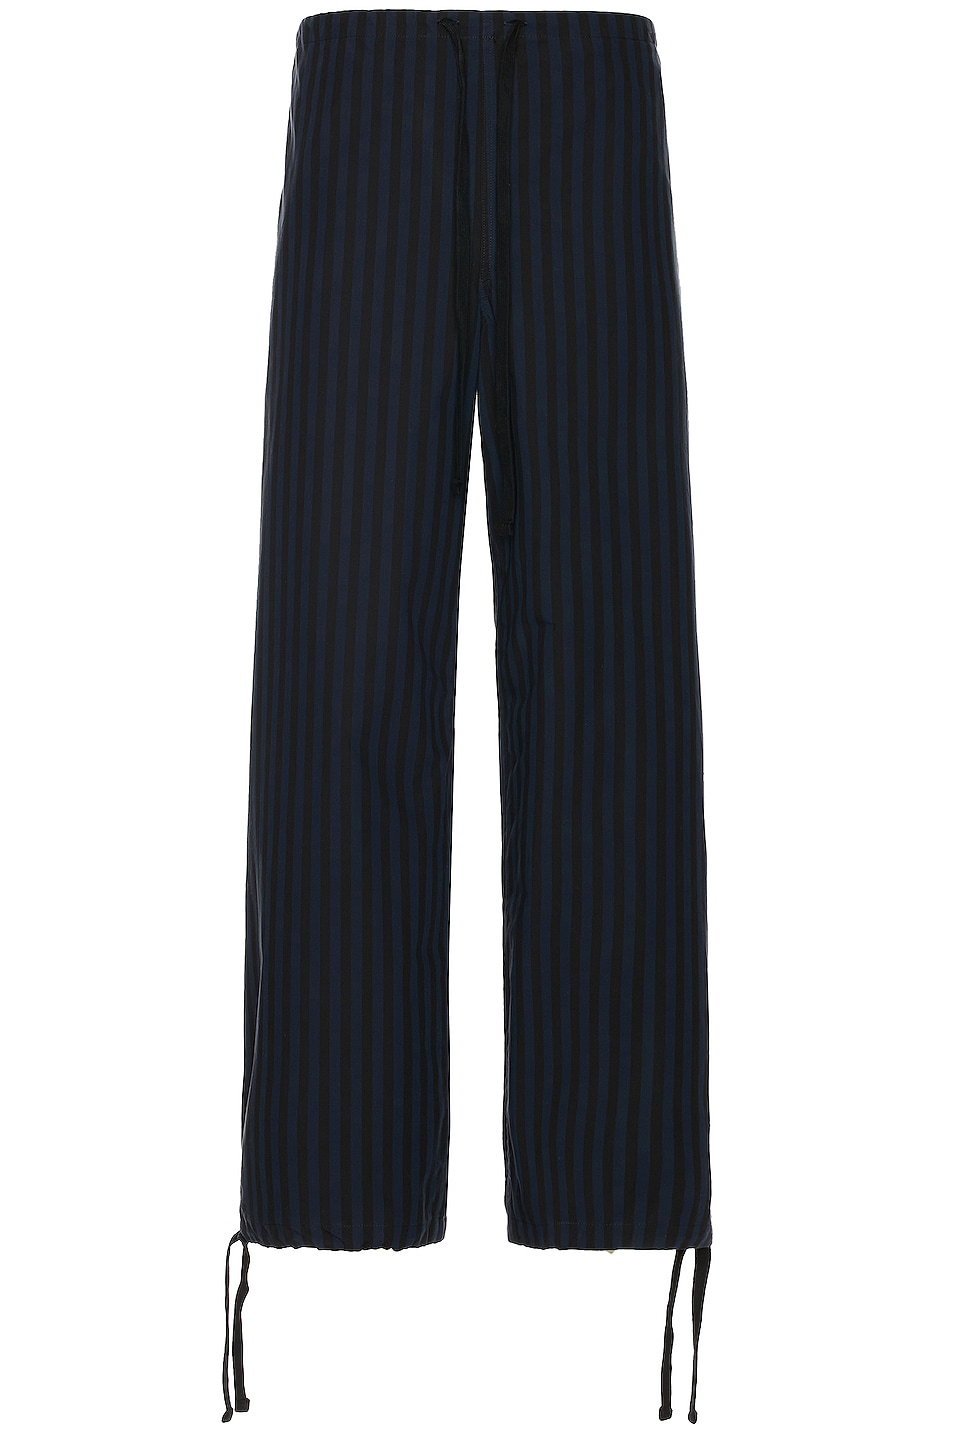 Image 1 of TS(S) Block Stripe High Density Cloth Drawstring Wide Pants in Black & Navy